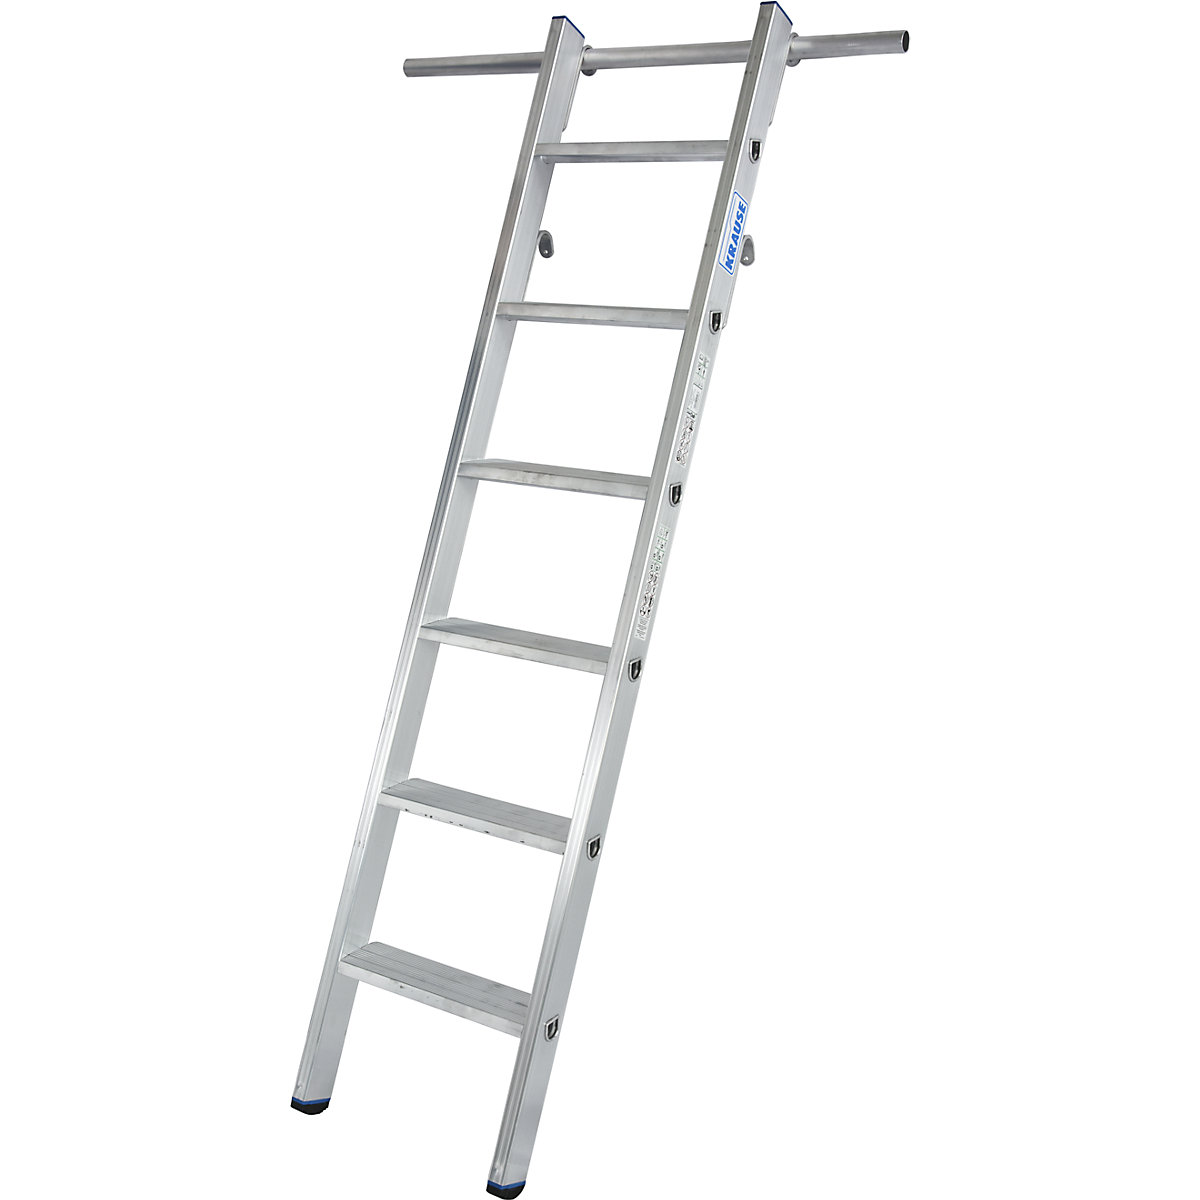 Step shelf ladder - KRAUSE